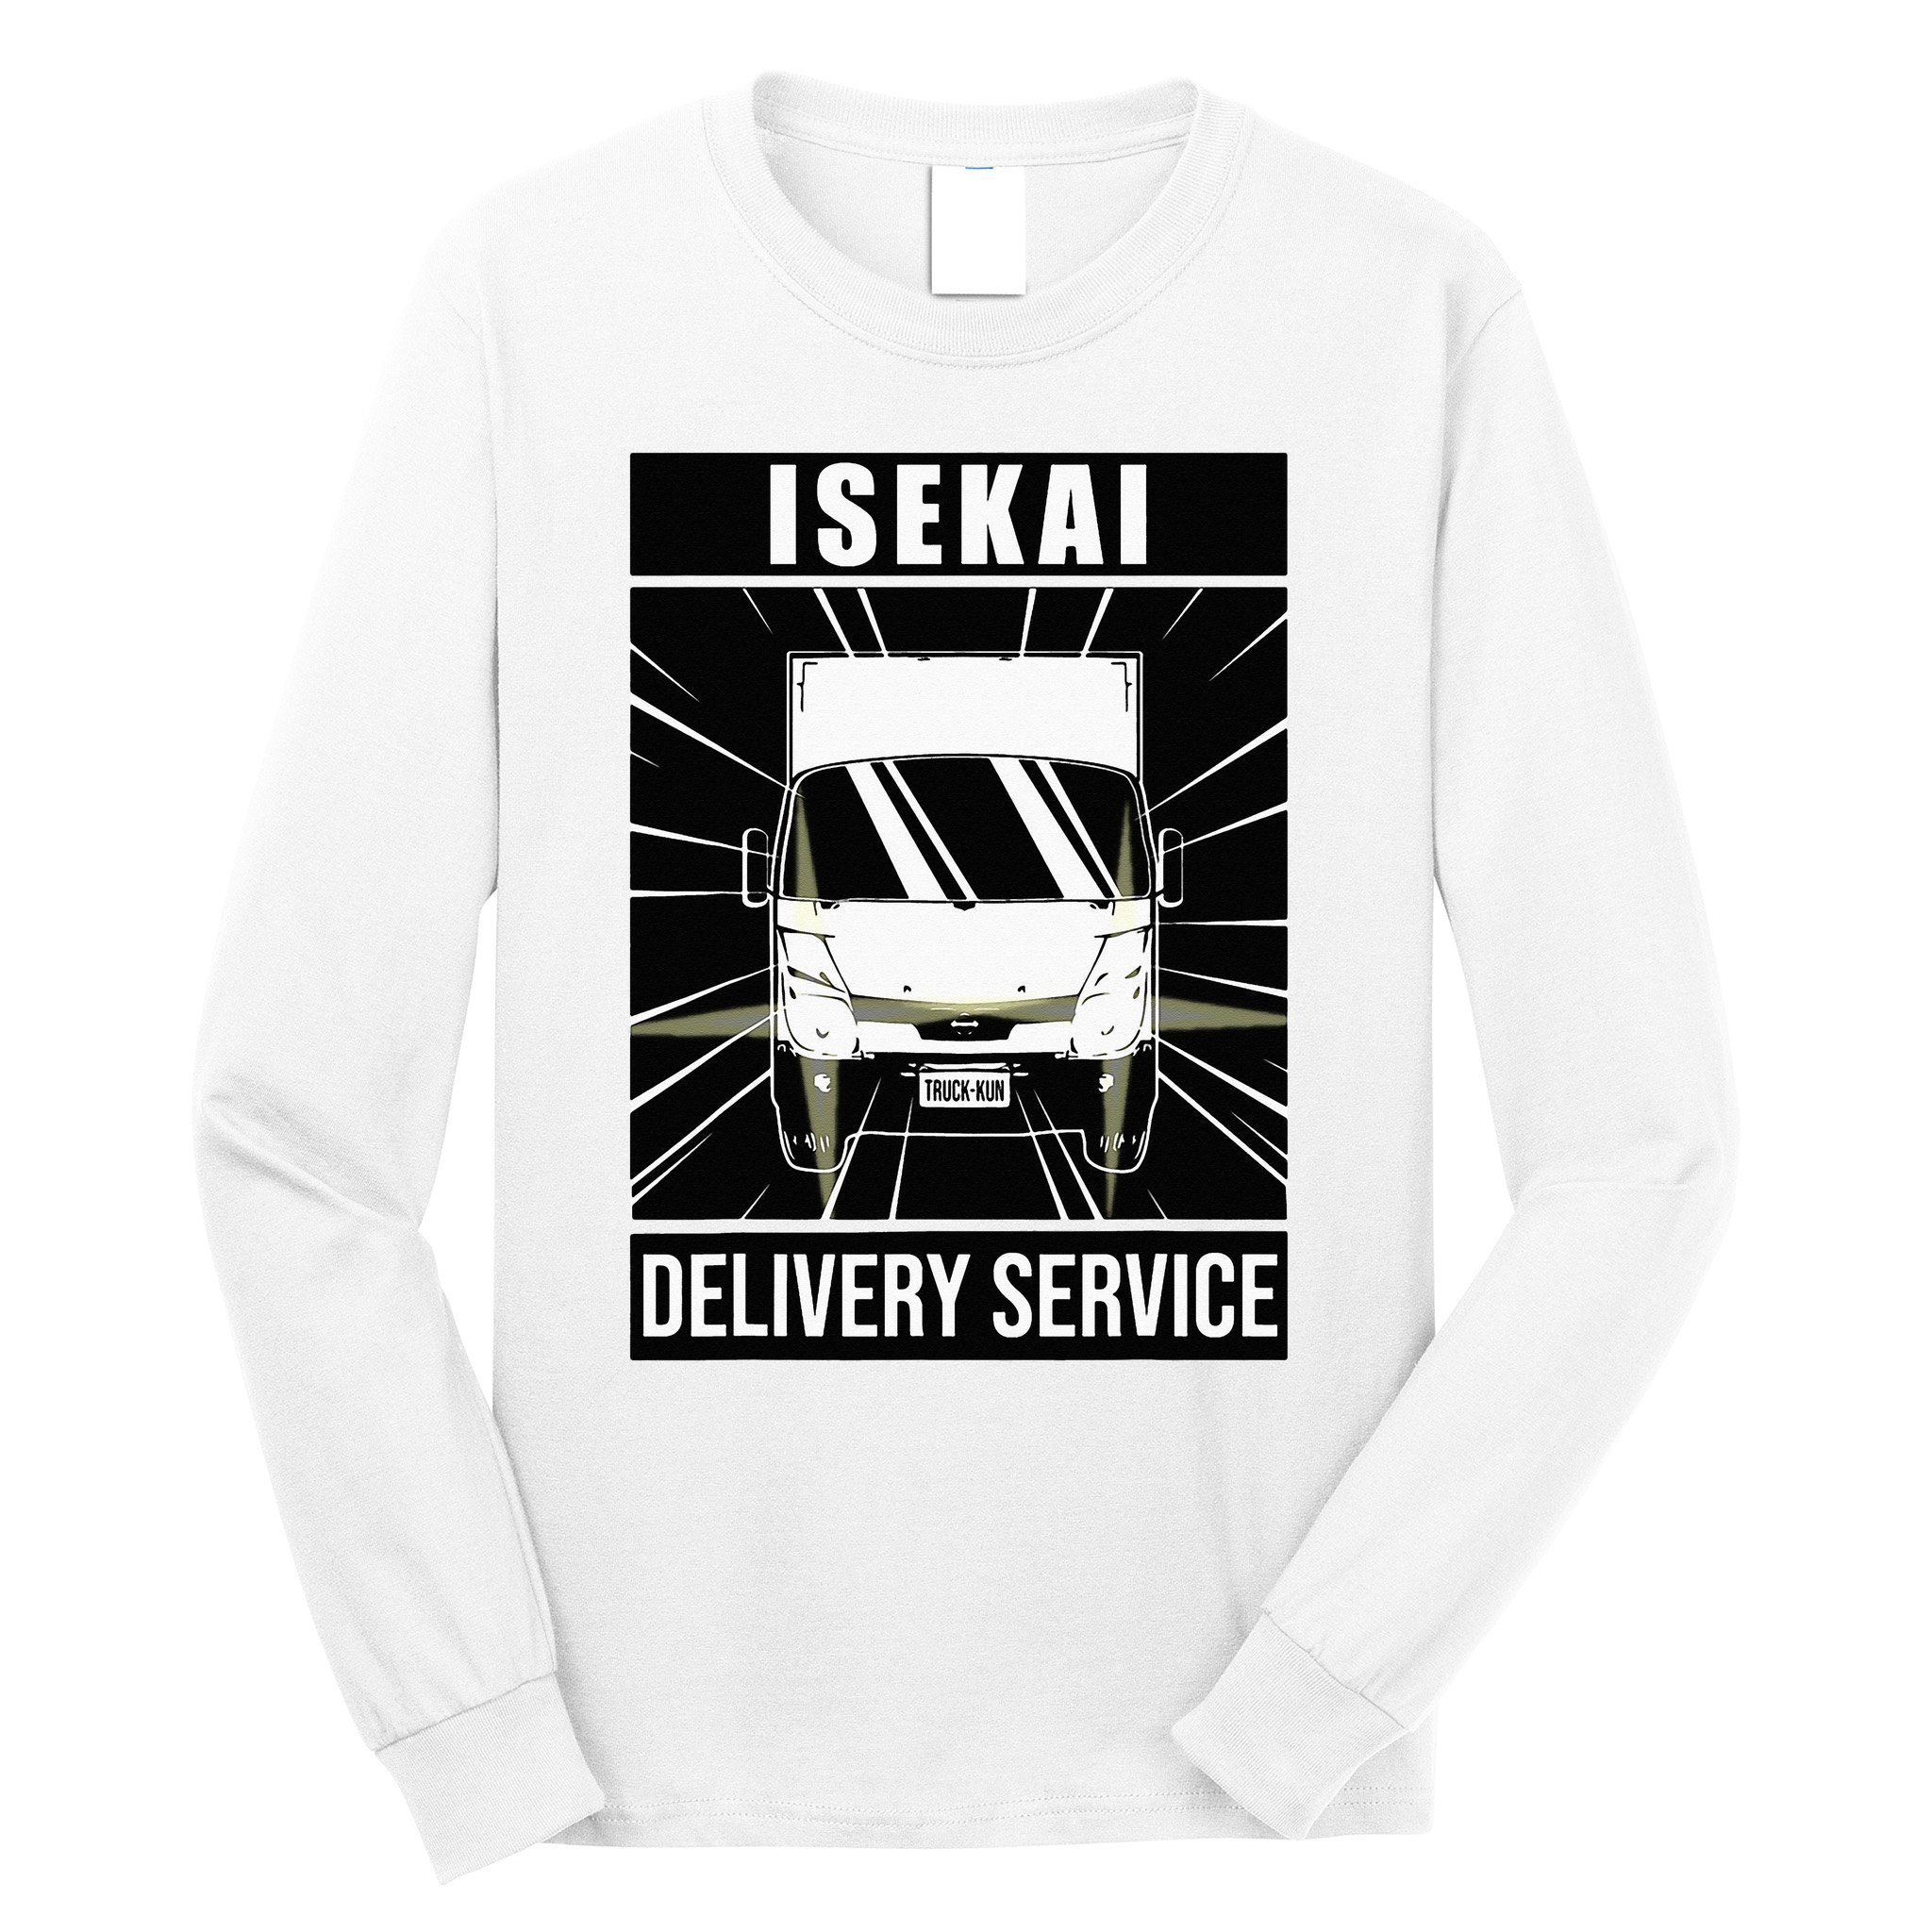 Isekai Shipping 